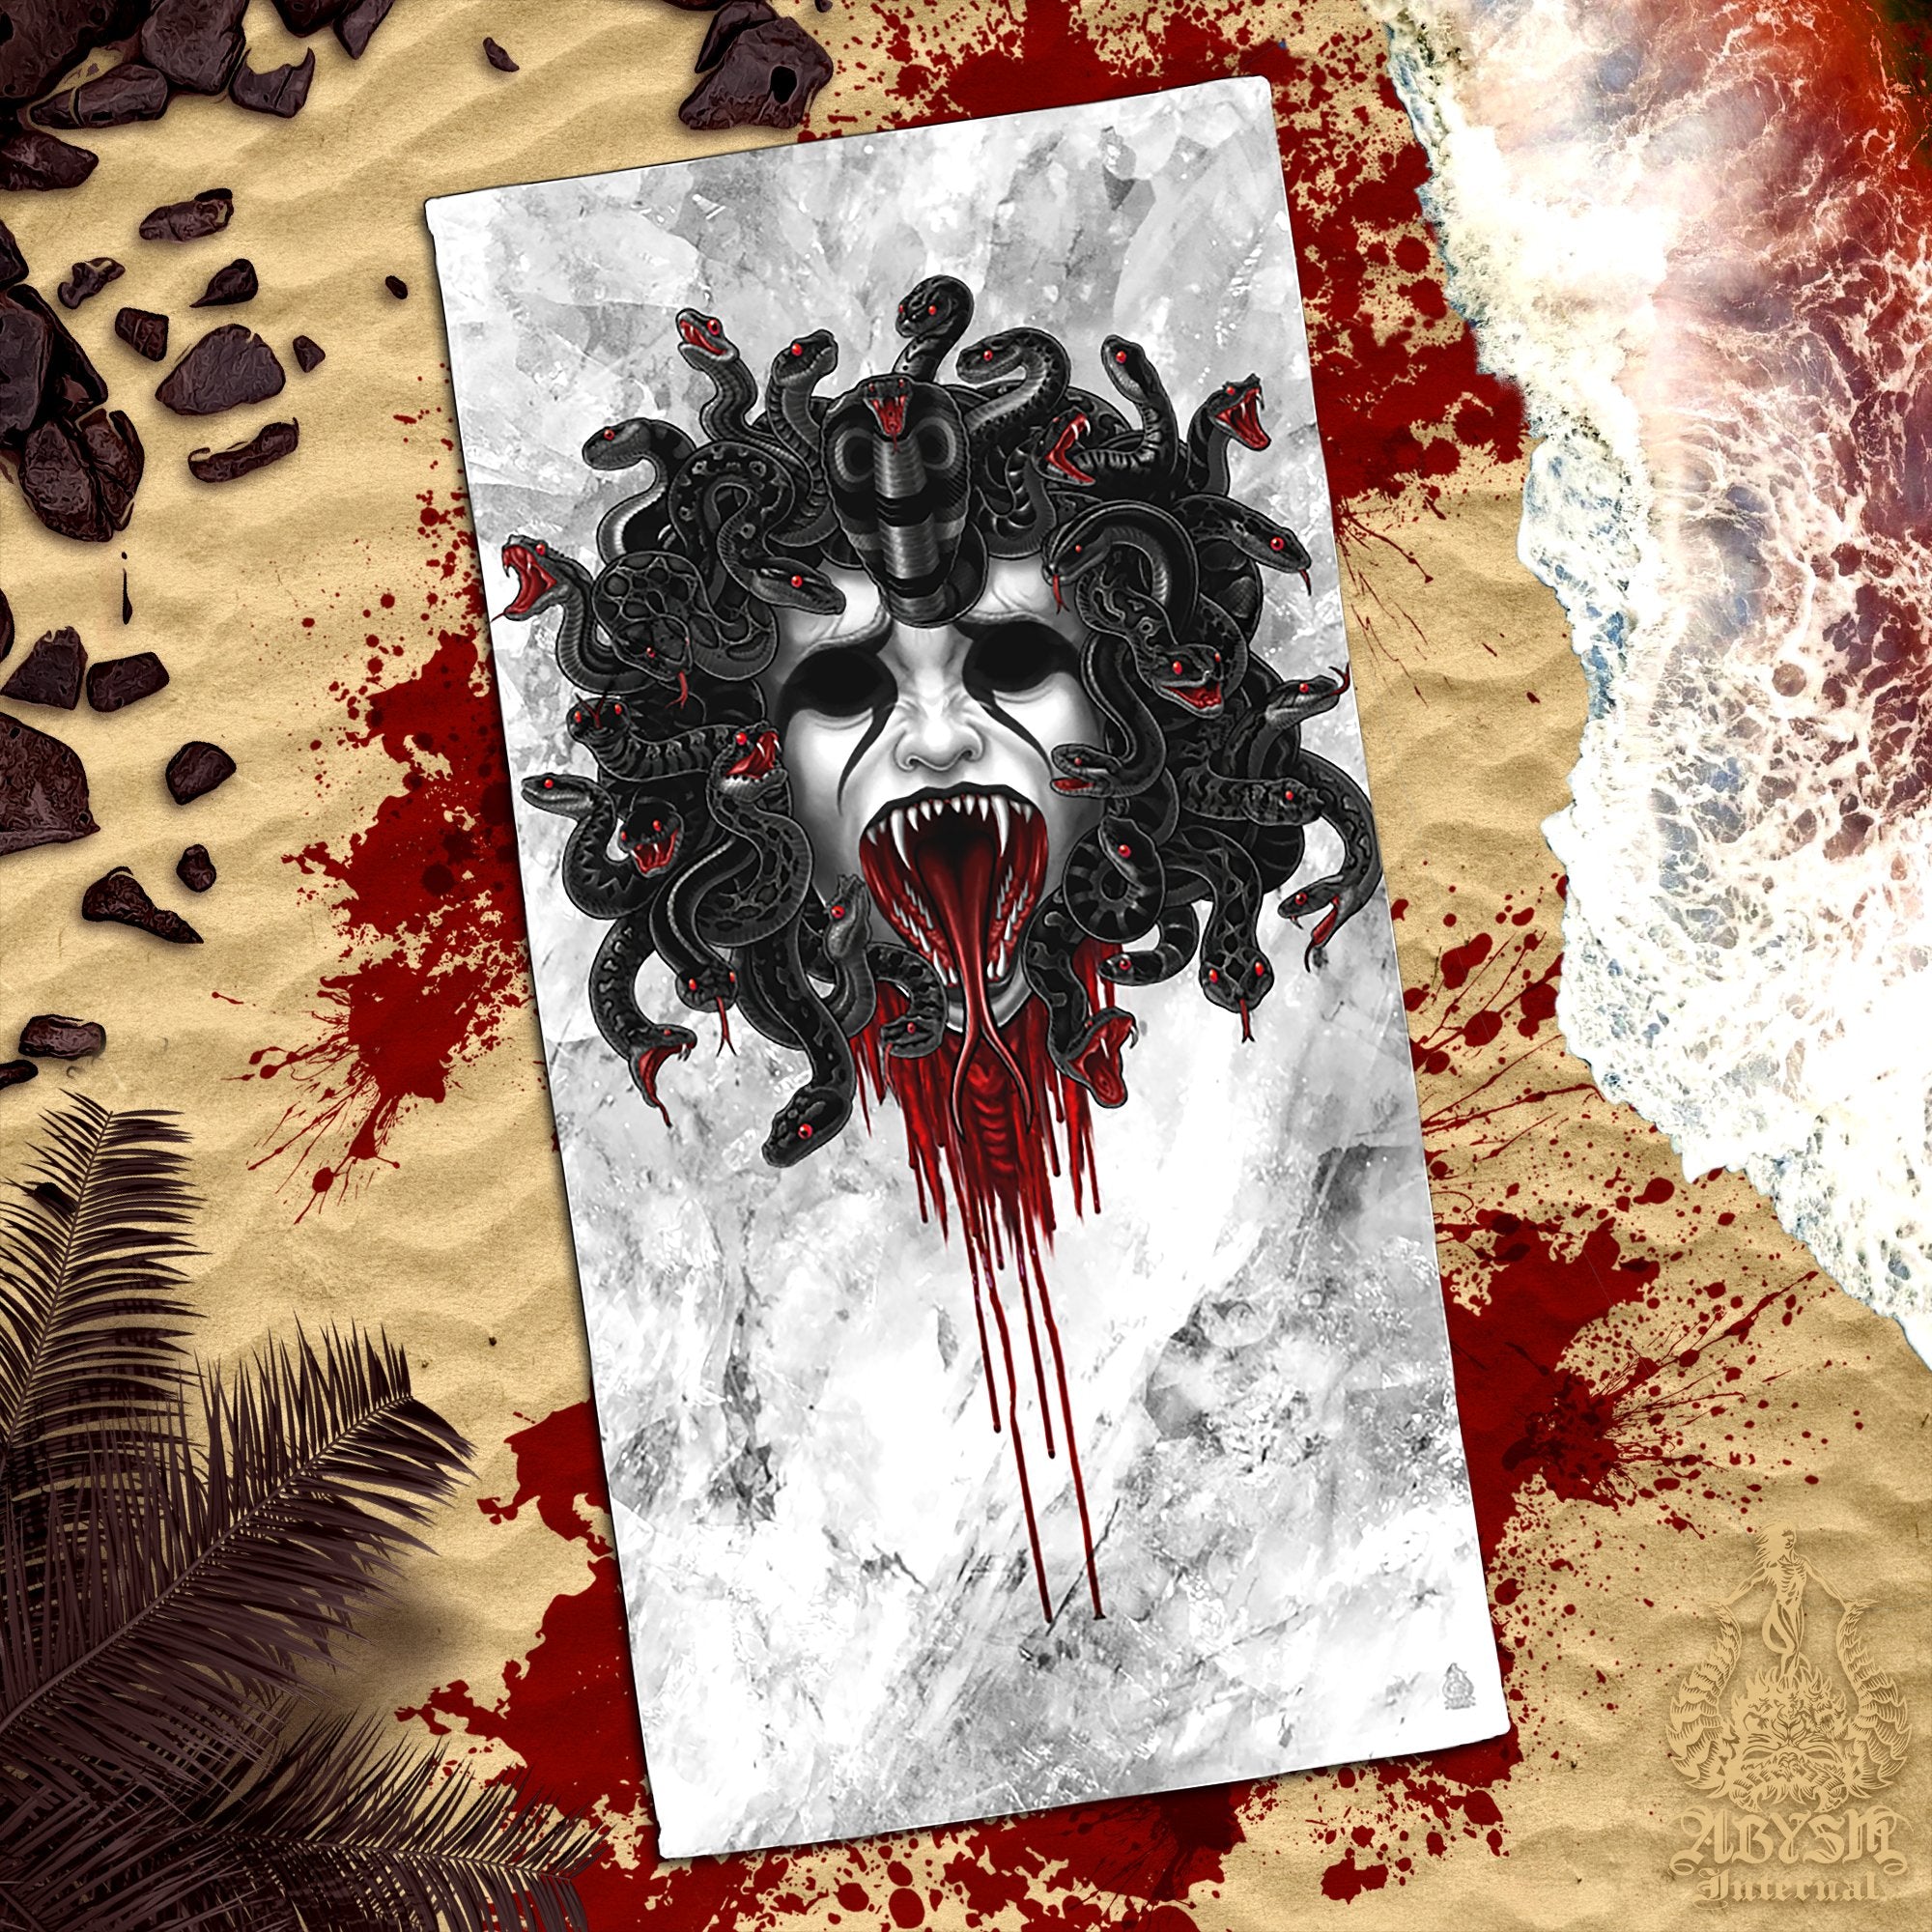 Gothic Medusa Beach Towel, Nu Goth Skull Art - 2 Faces, 3 Snake Colors, Black & White - Abysm Internal